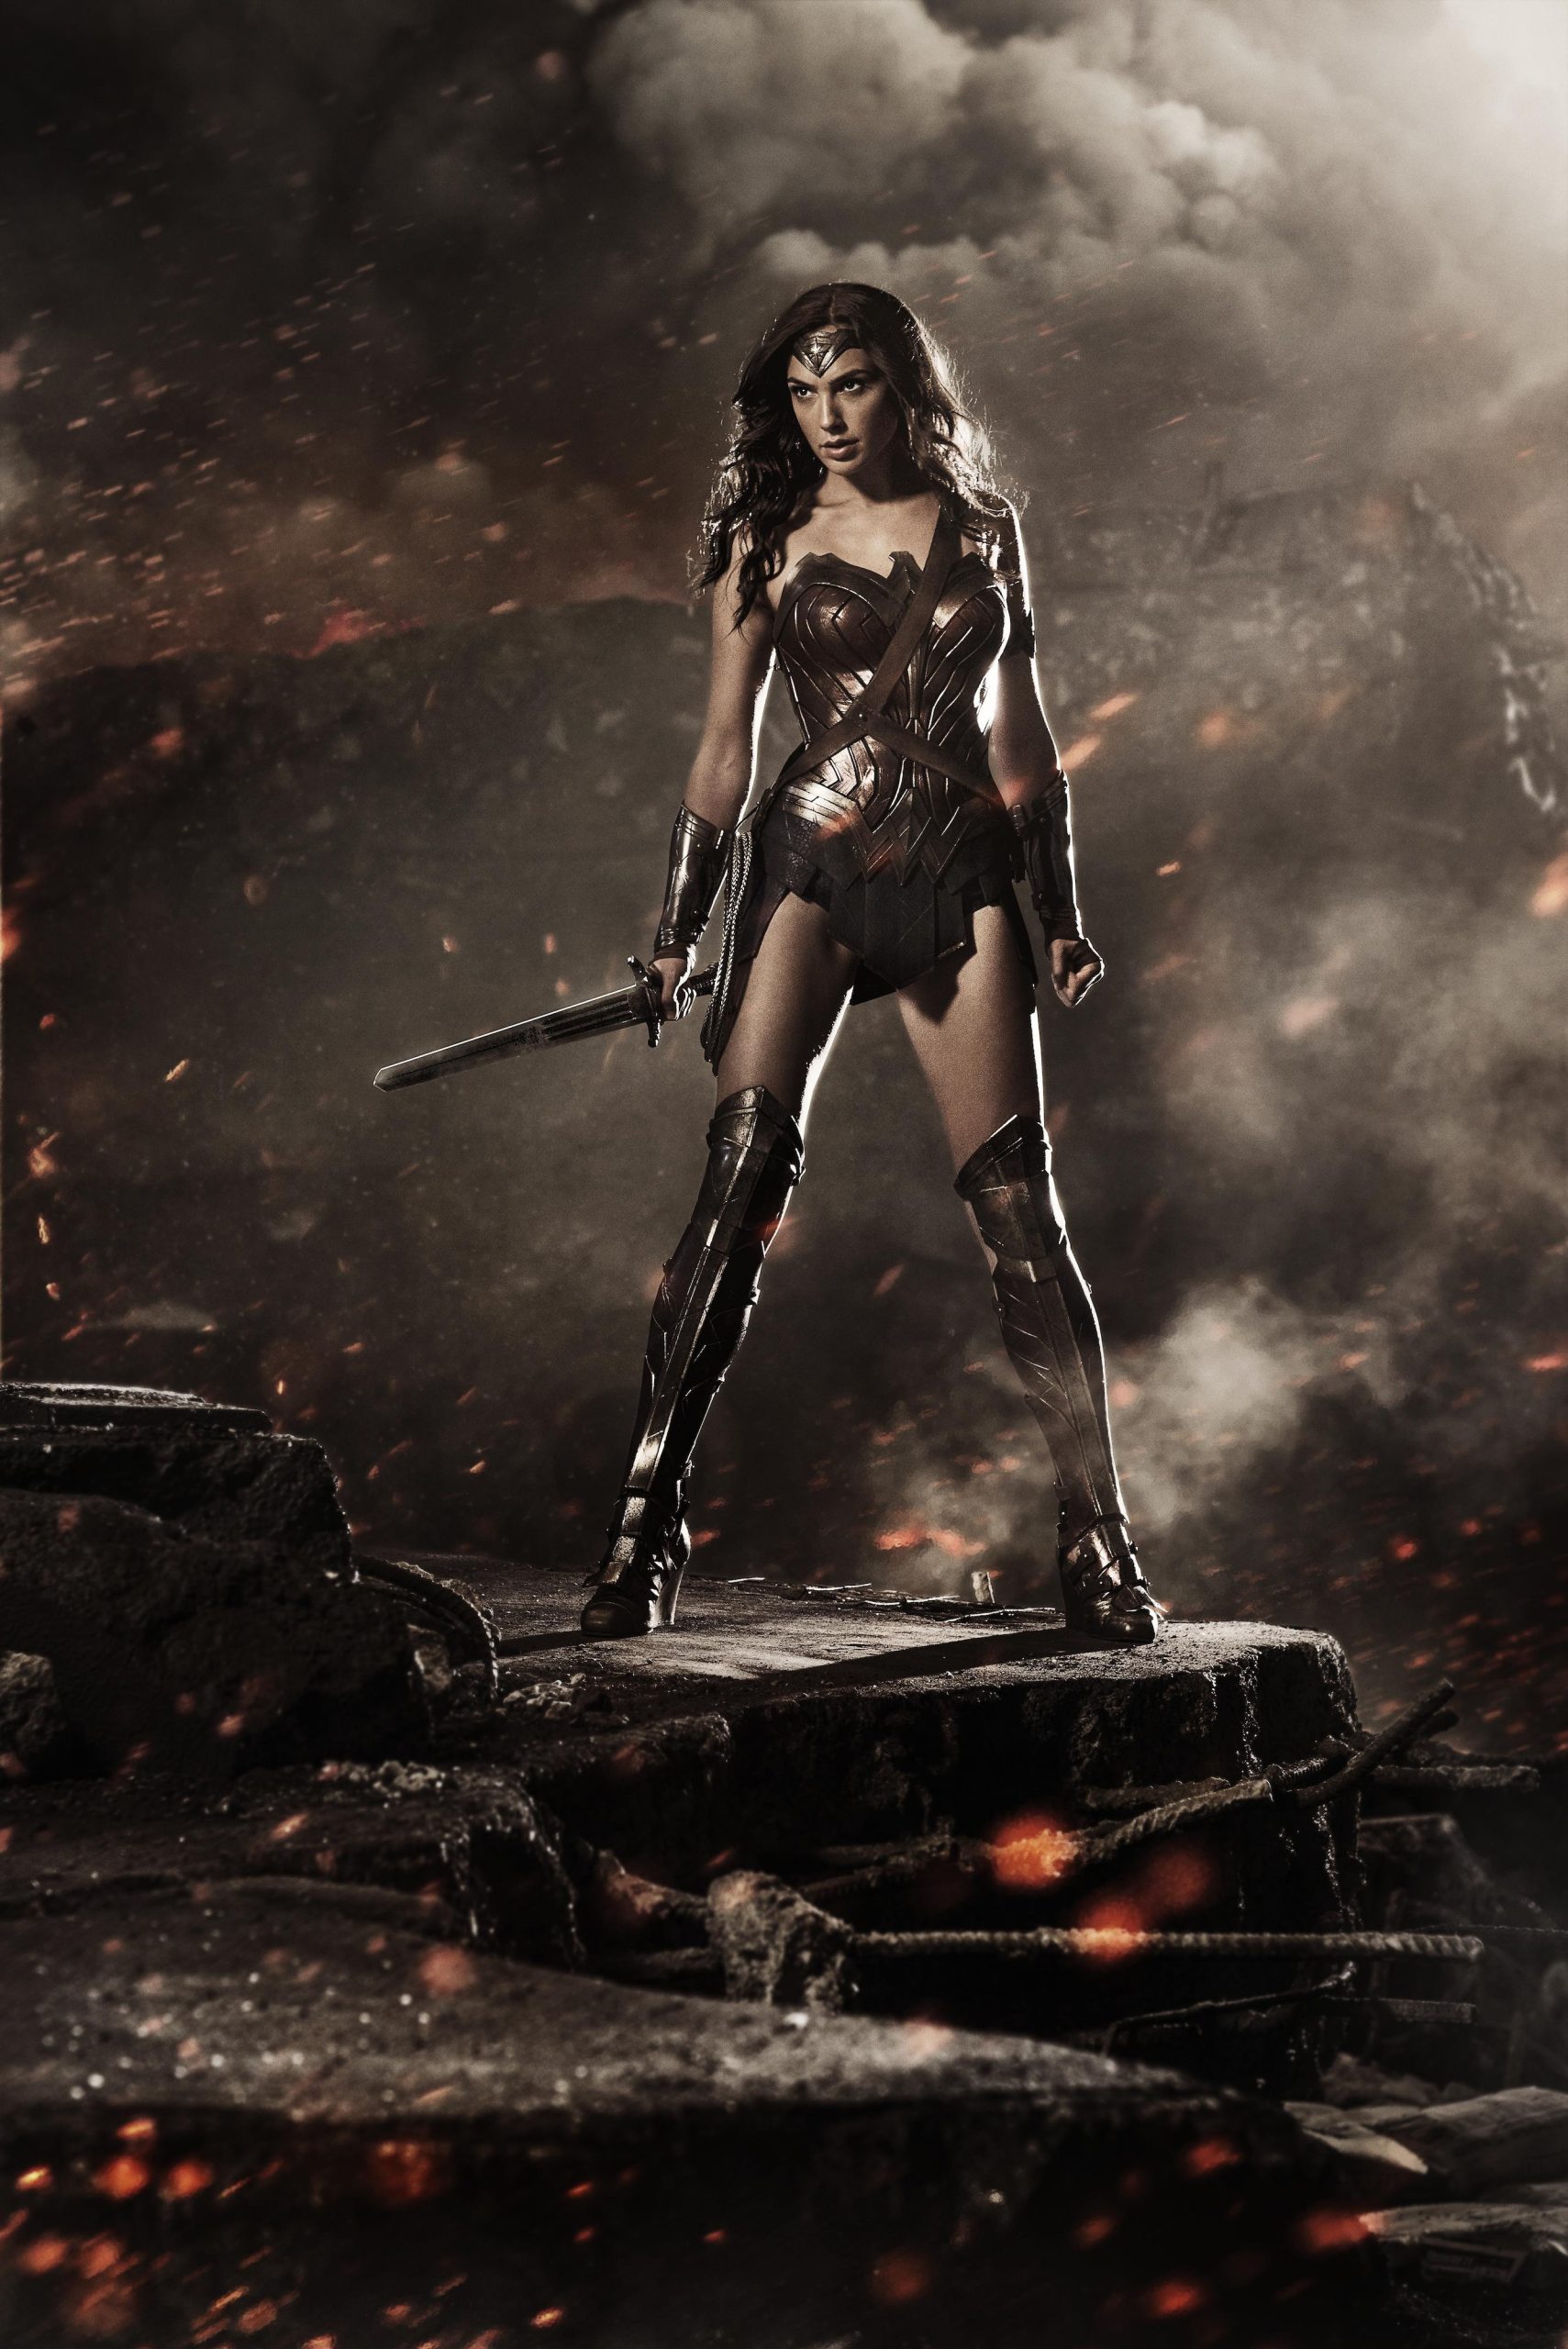 Zack Snyder reveals first look at Gal Gadot as Wonder Woman in Batman vs Superman